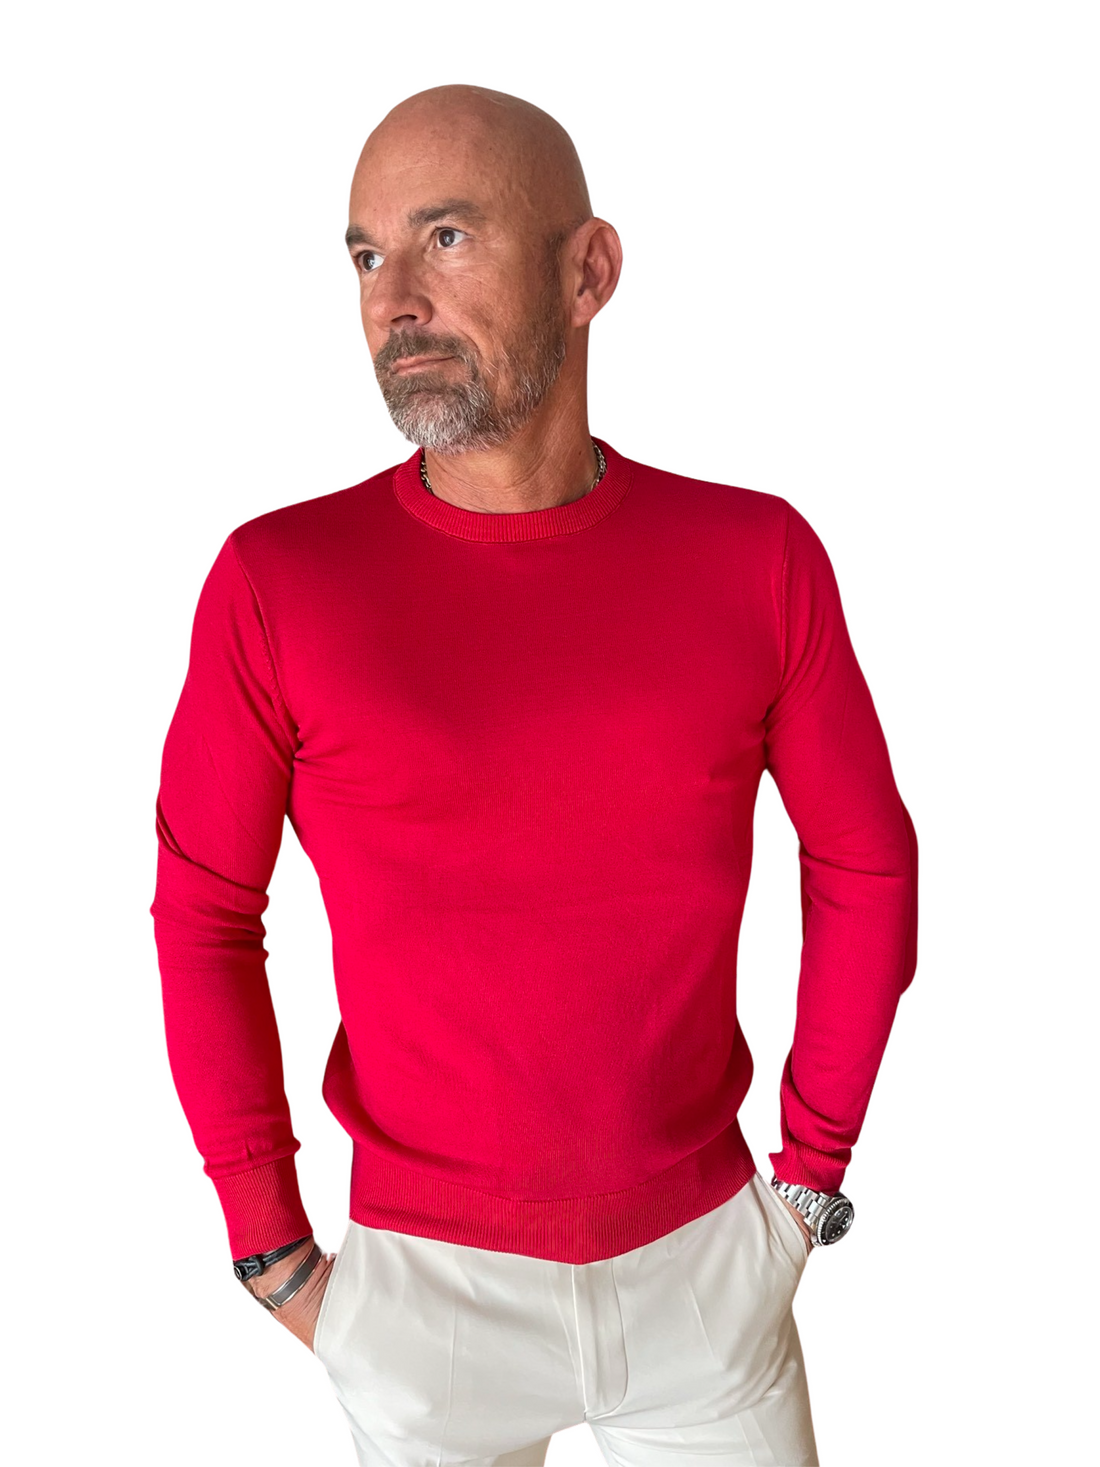 Pullover in 5 Farben